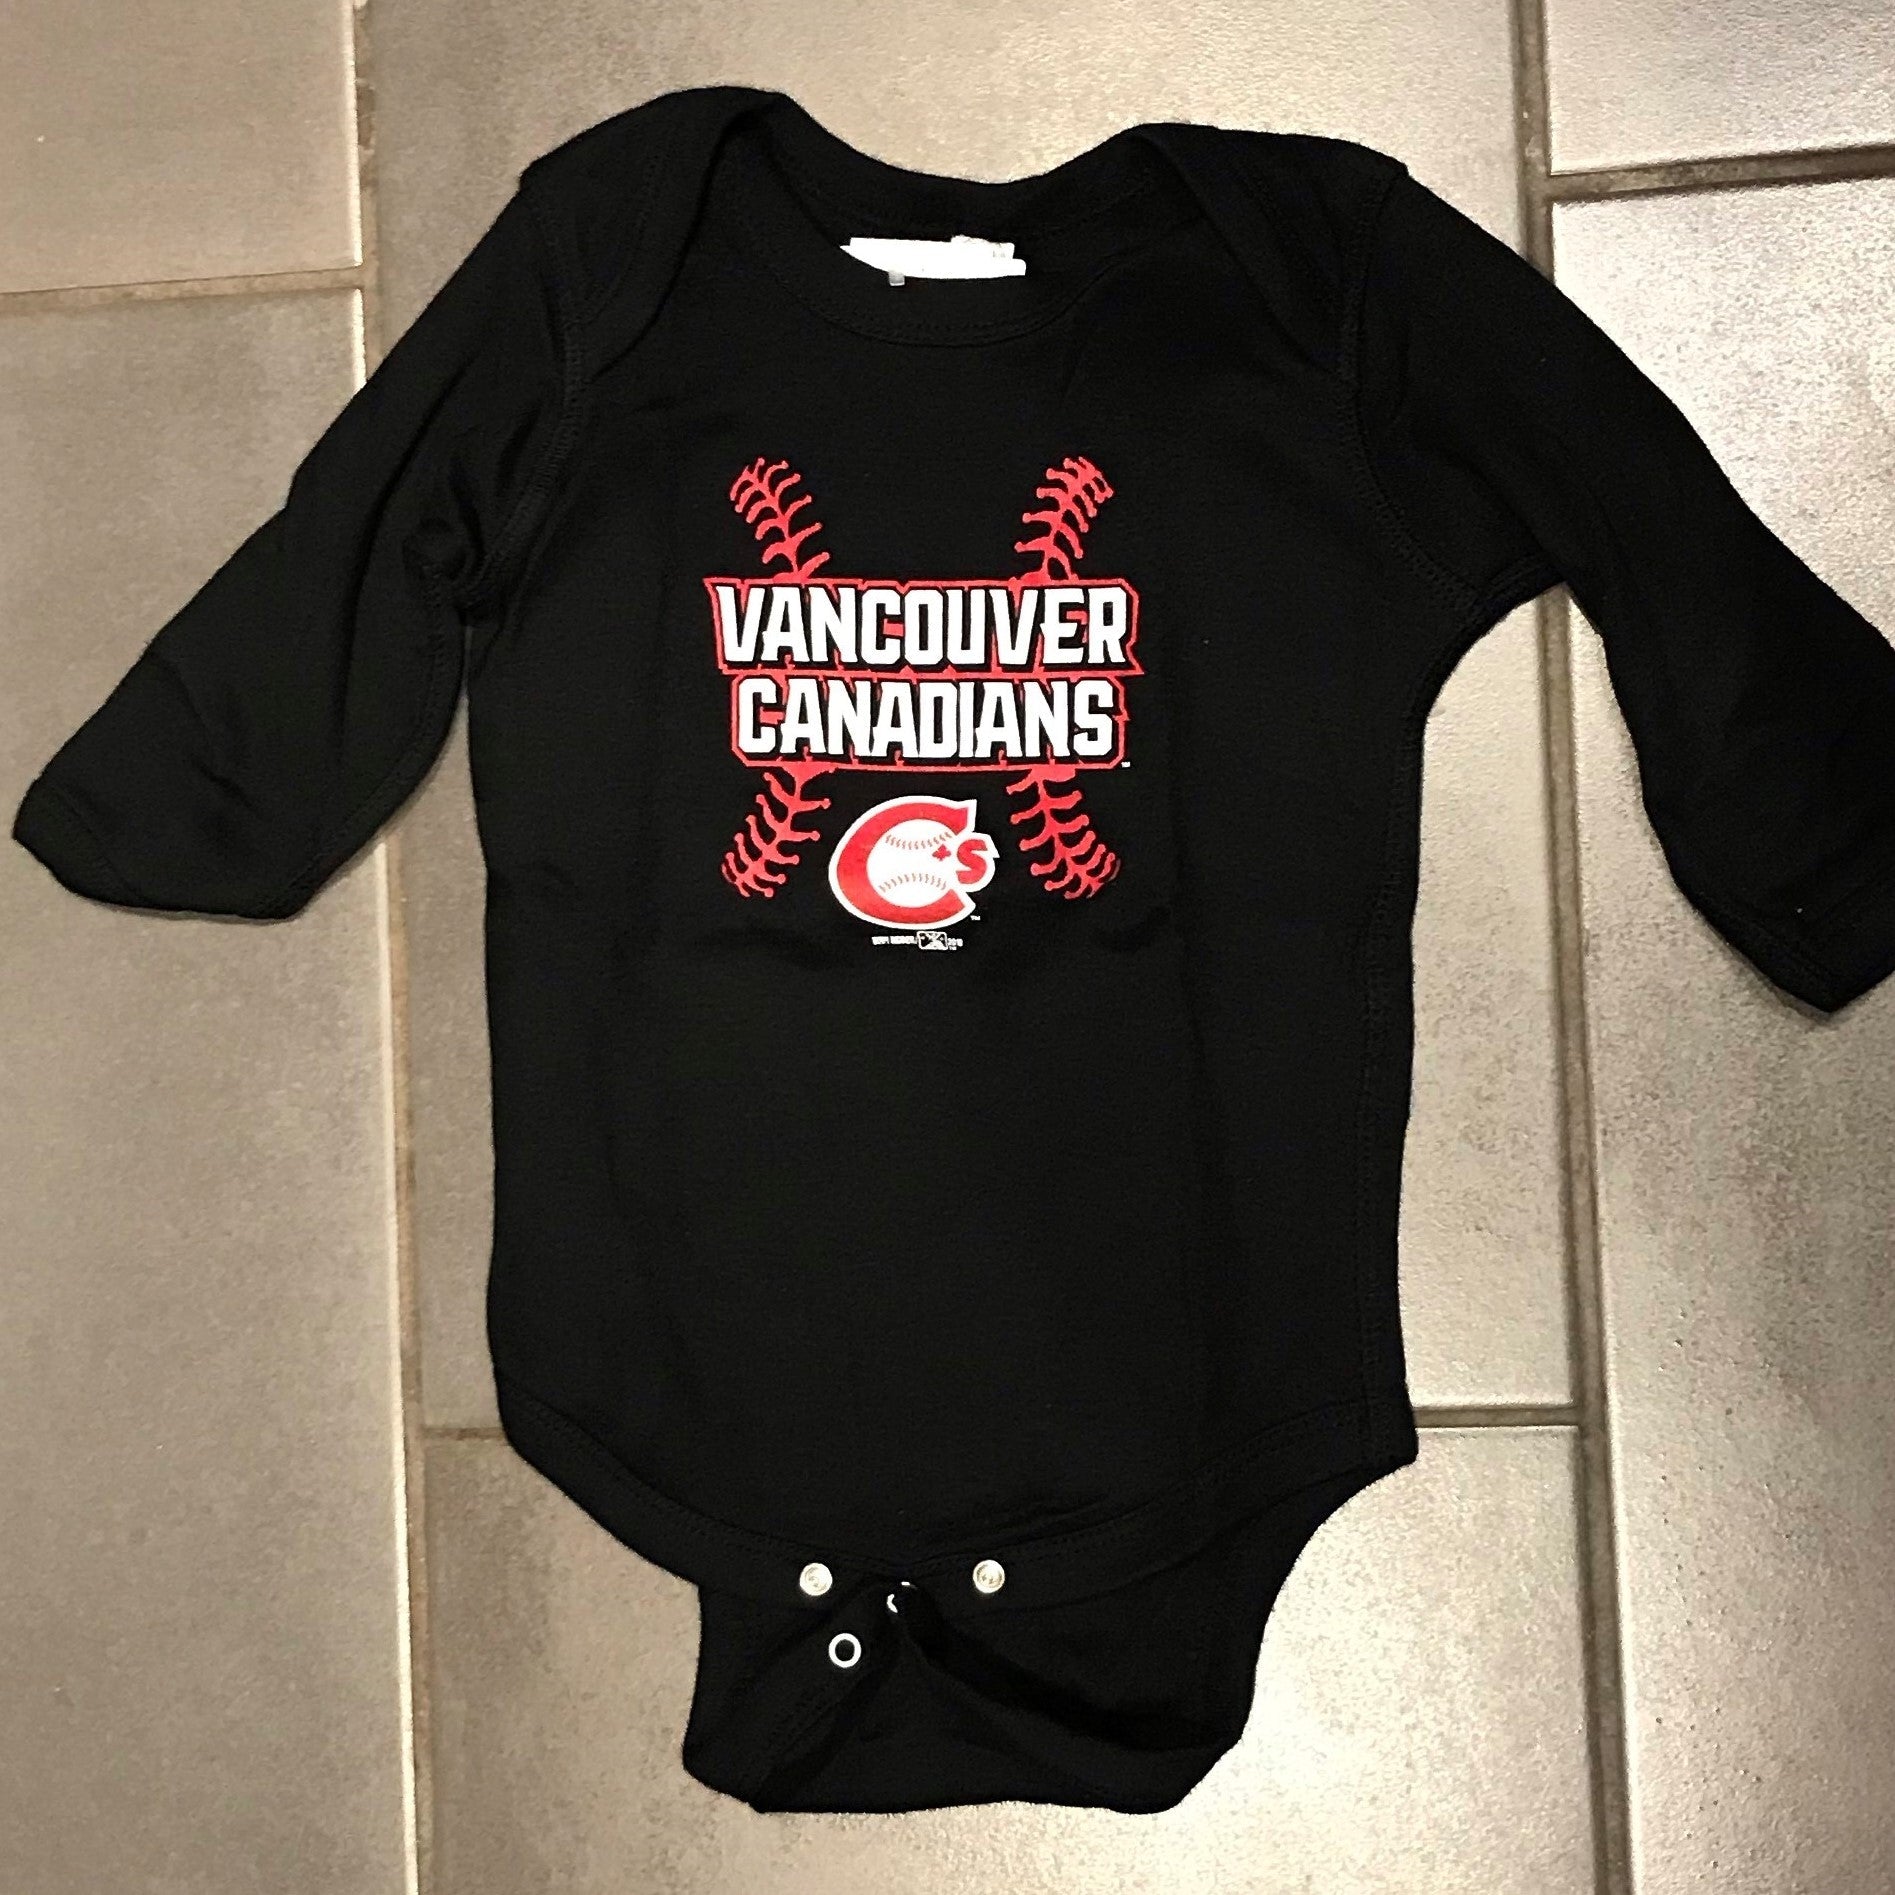 Vancouver Canucks Baby Clothing, Canucks Infant Jerseys, Toddler